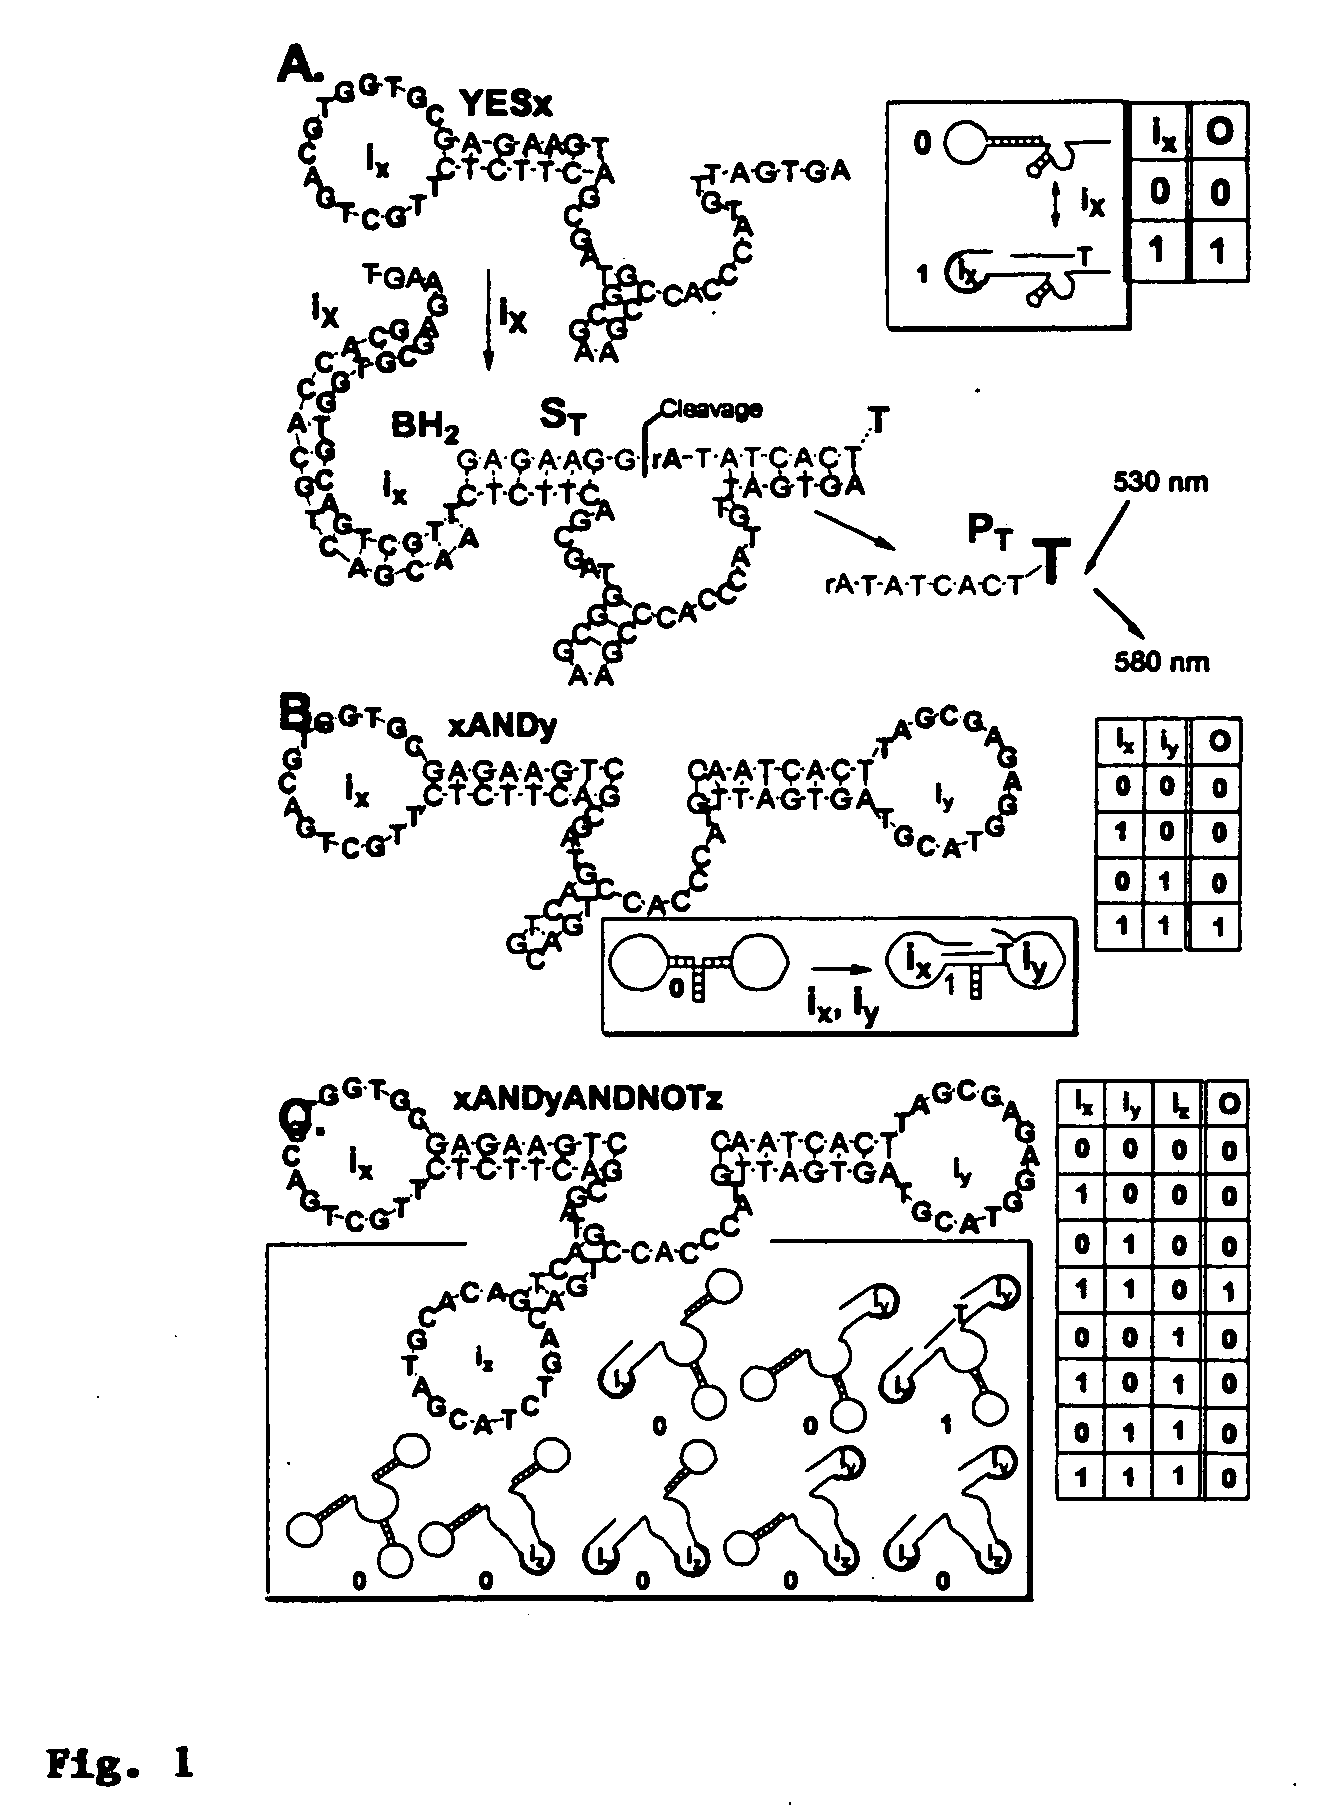 Medium scale intergration of molecular logic gates in an automaton